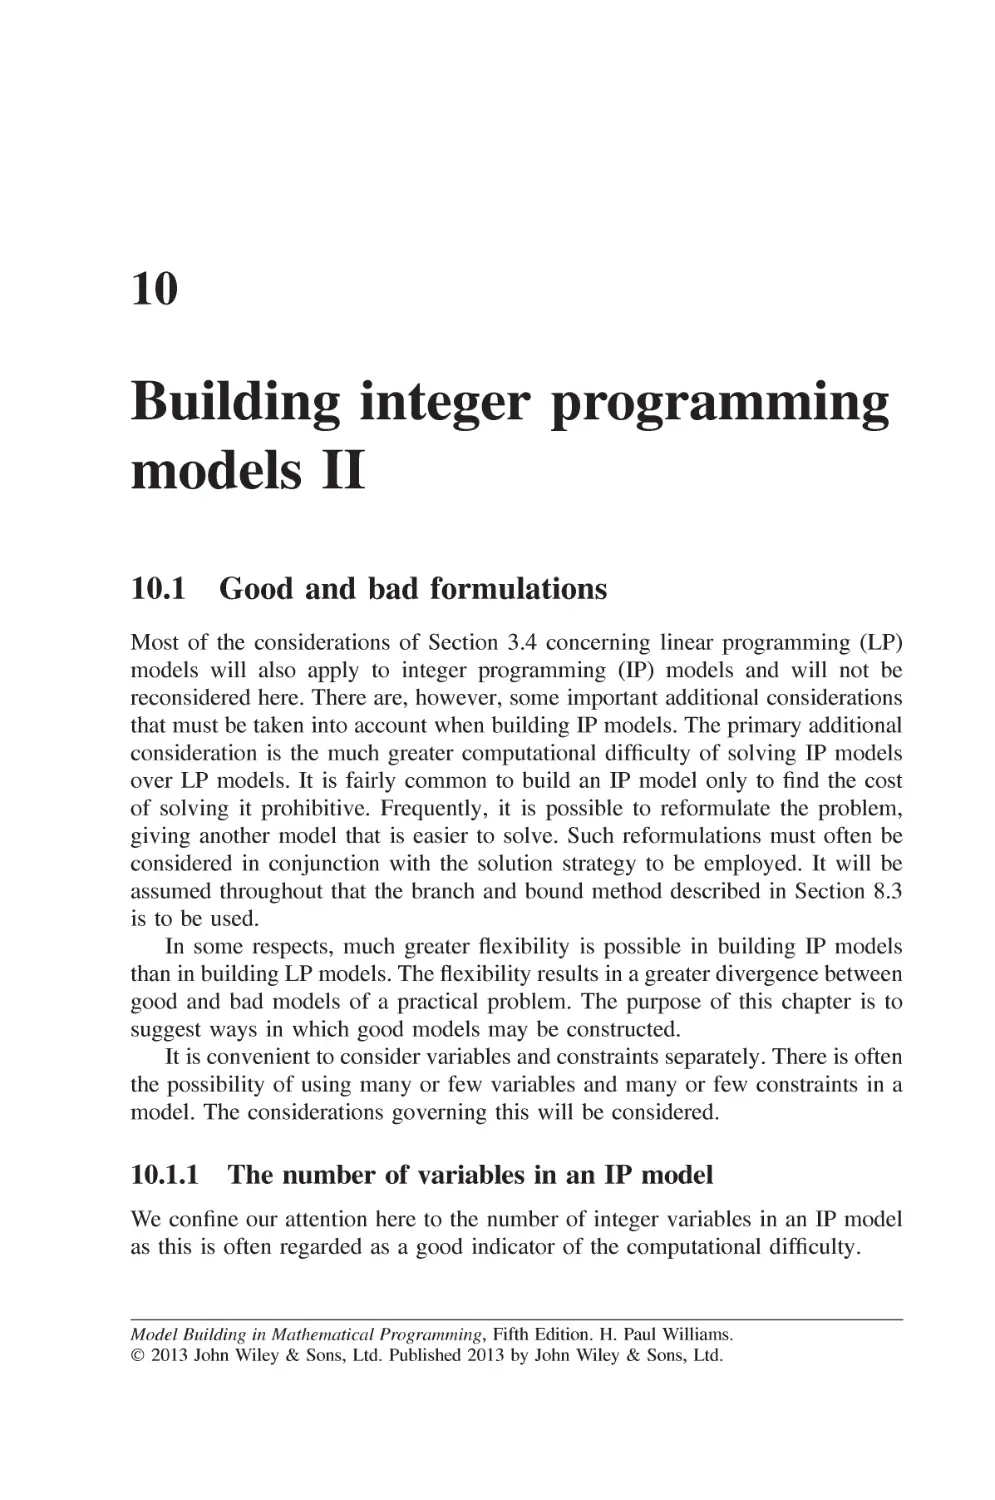 Chapter 10 Building integer programming models II